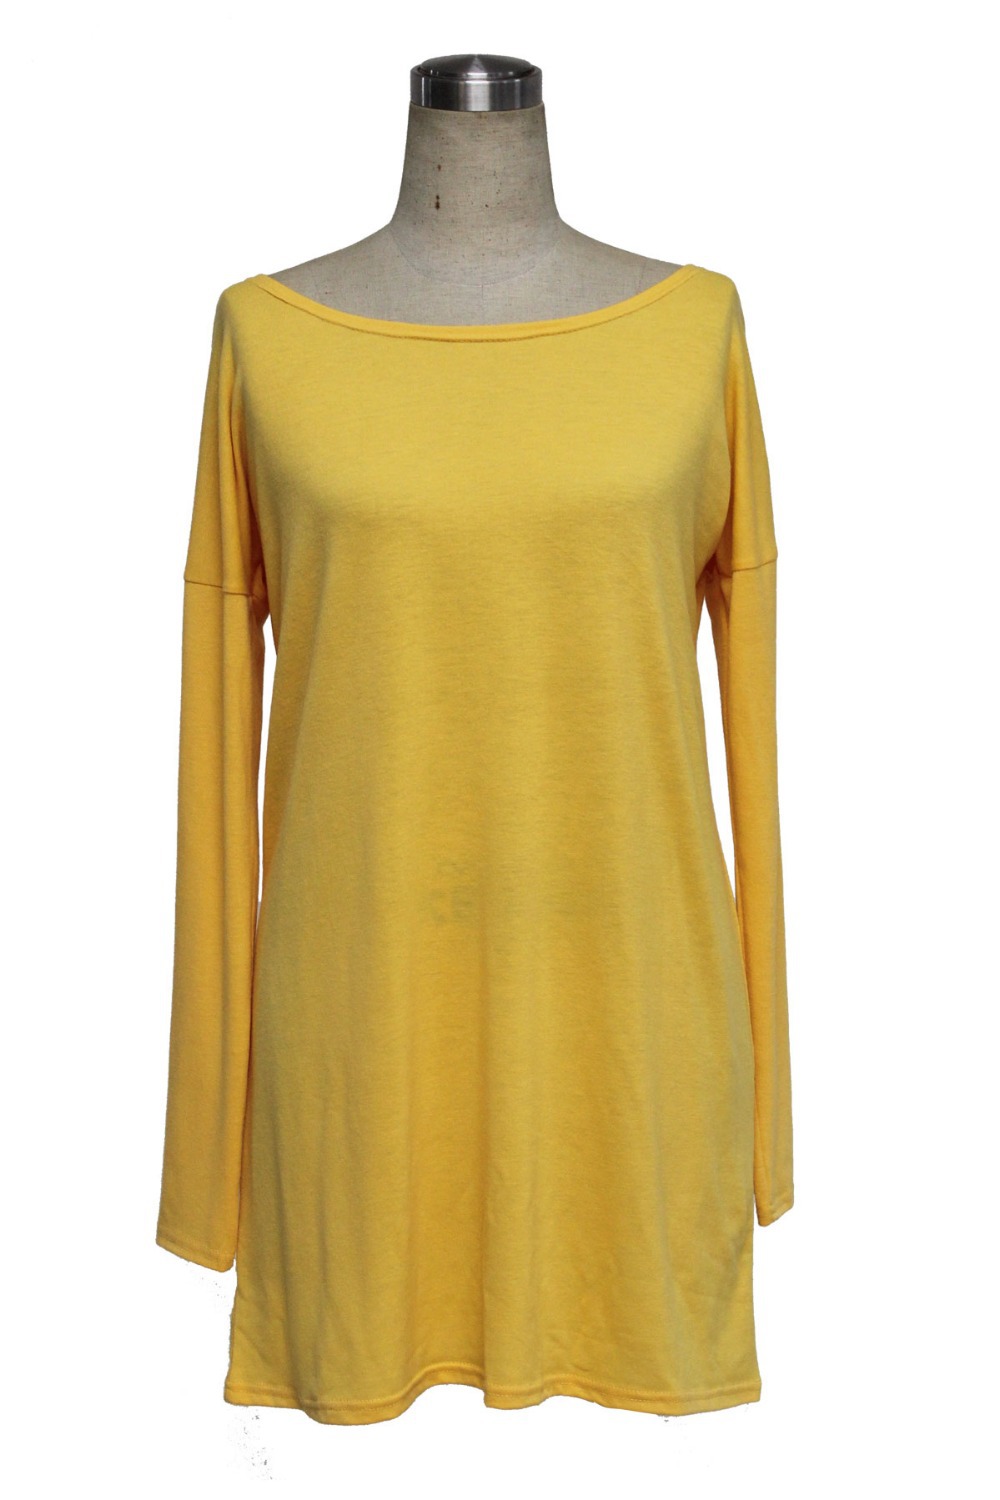 Fashion Women Elegant Cotton shirts Dresses O-neck long Sleeve Casual brand yellow khaki amy green Plus Size